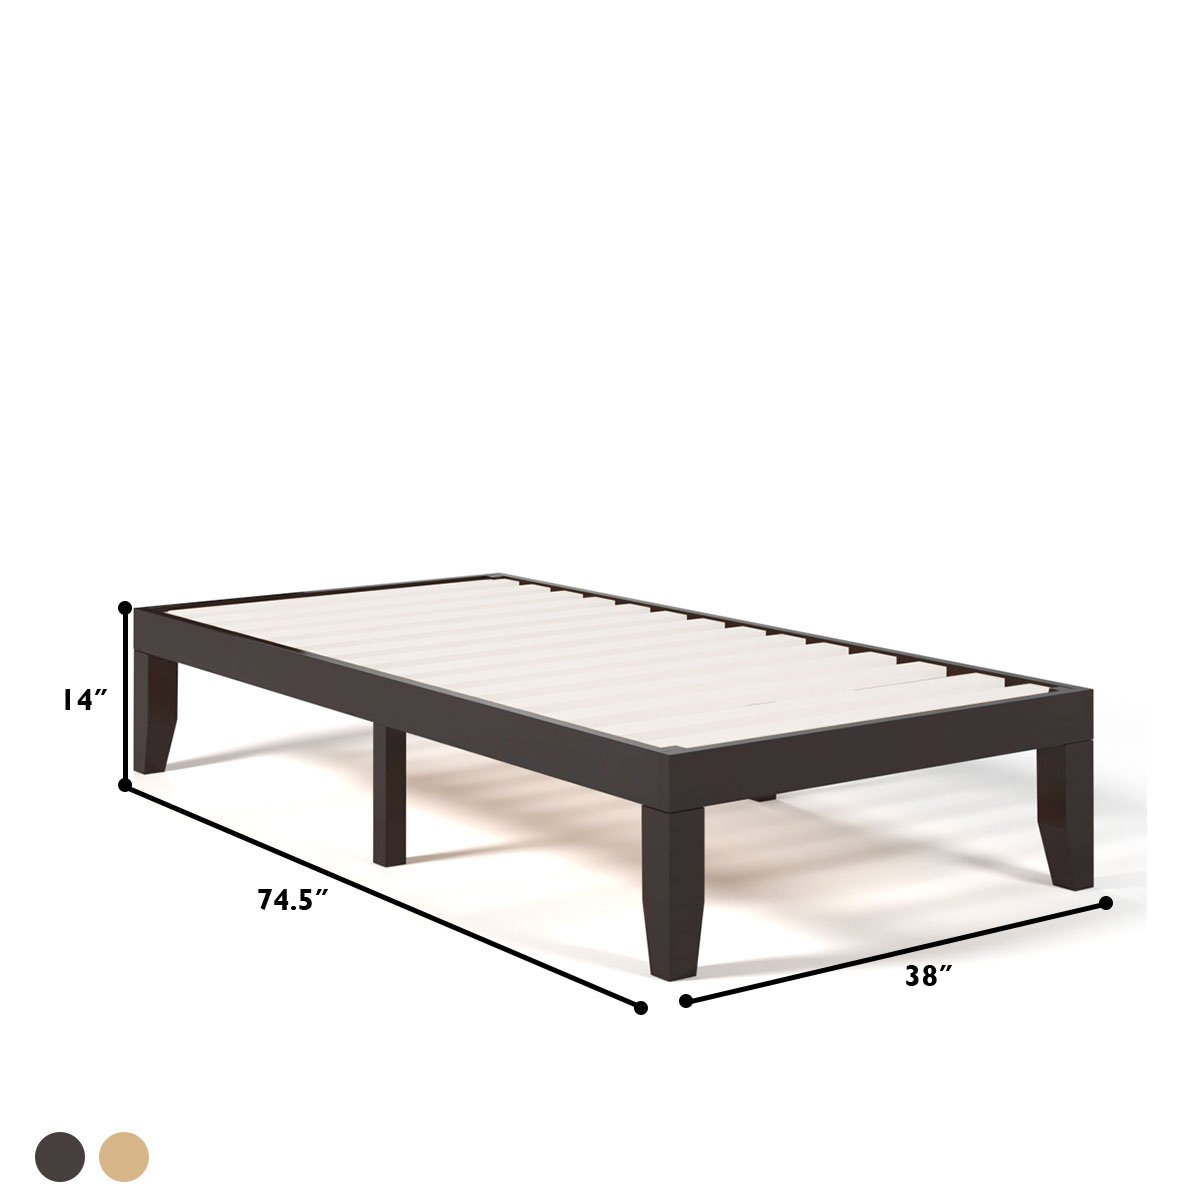 14'' Twin Size Wooden Platform Bed Frame W/ Strong Slat Support - Espresso